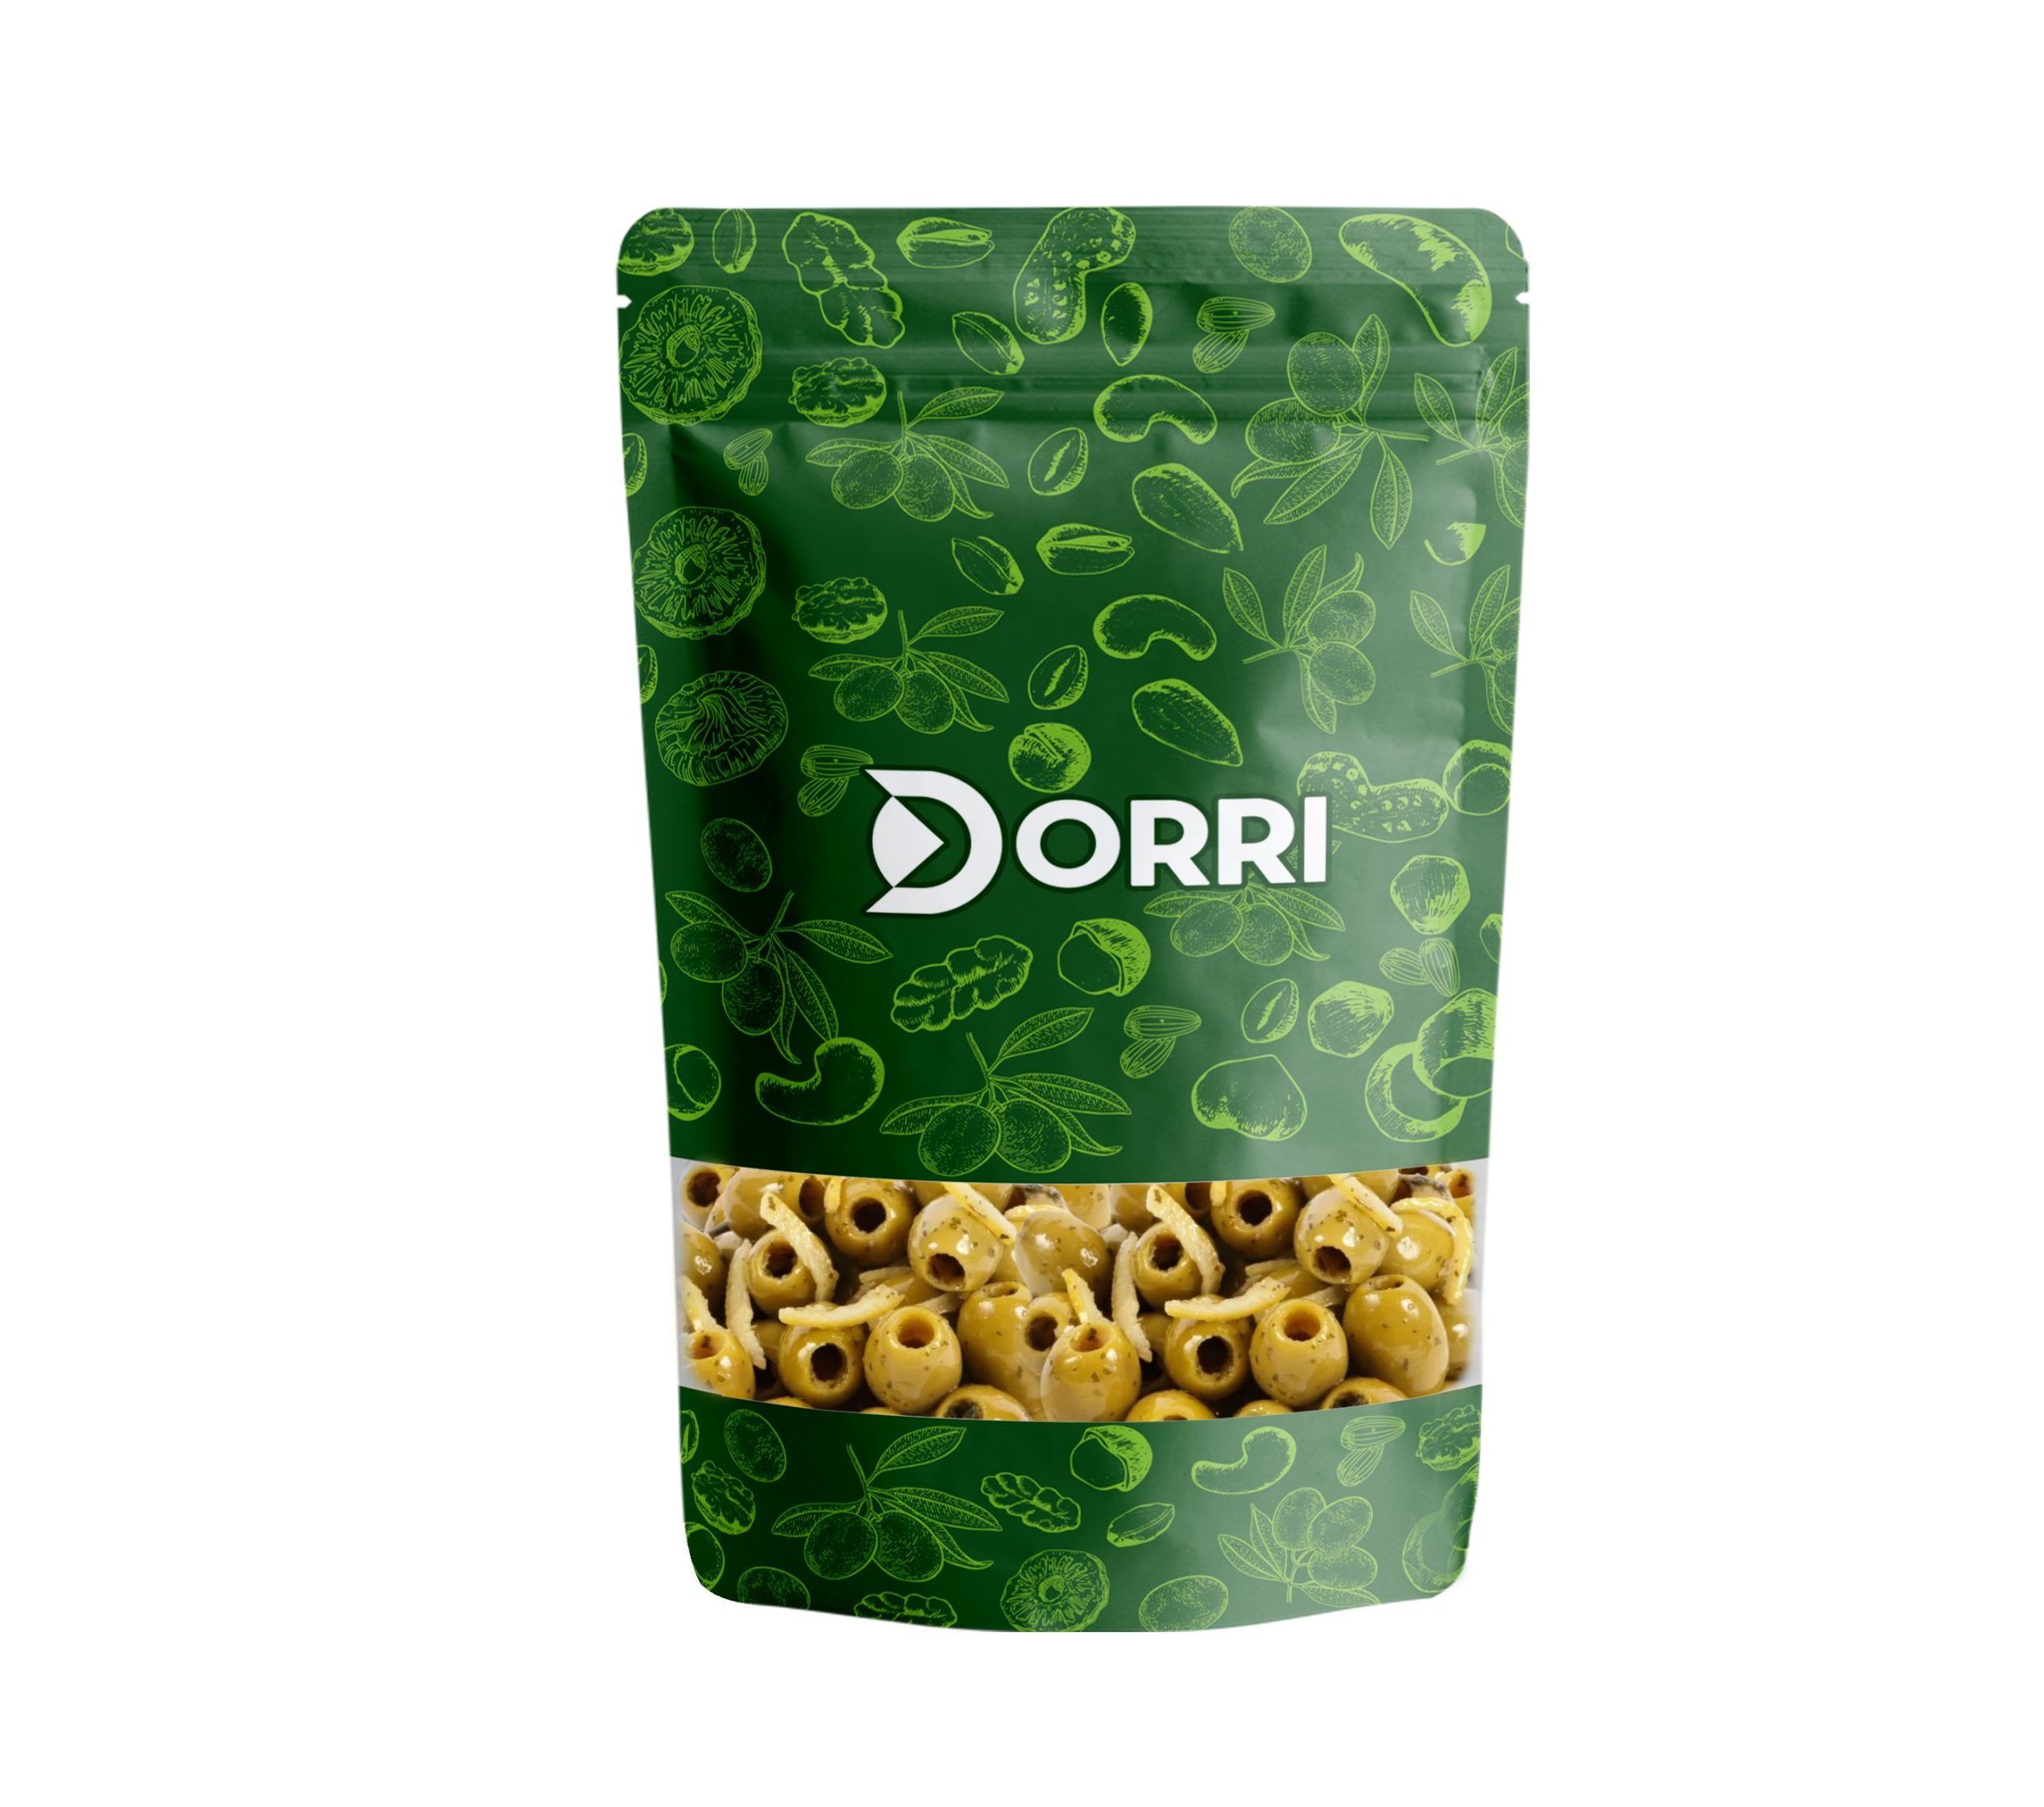 Dorri - Marinated Olives Lemon, Garlic and Coriander